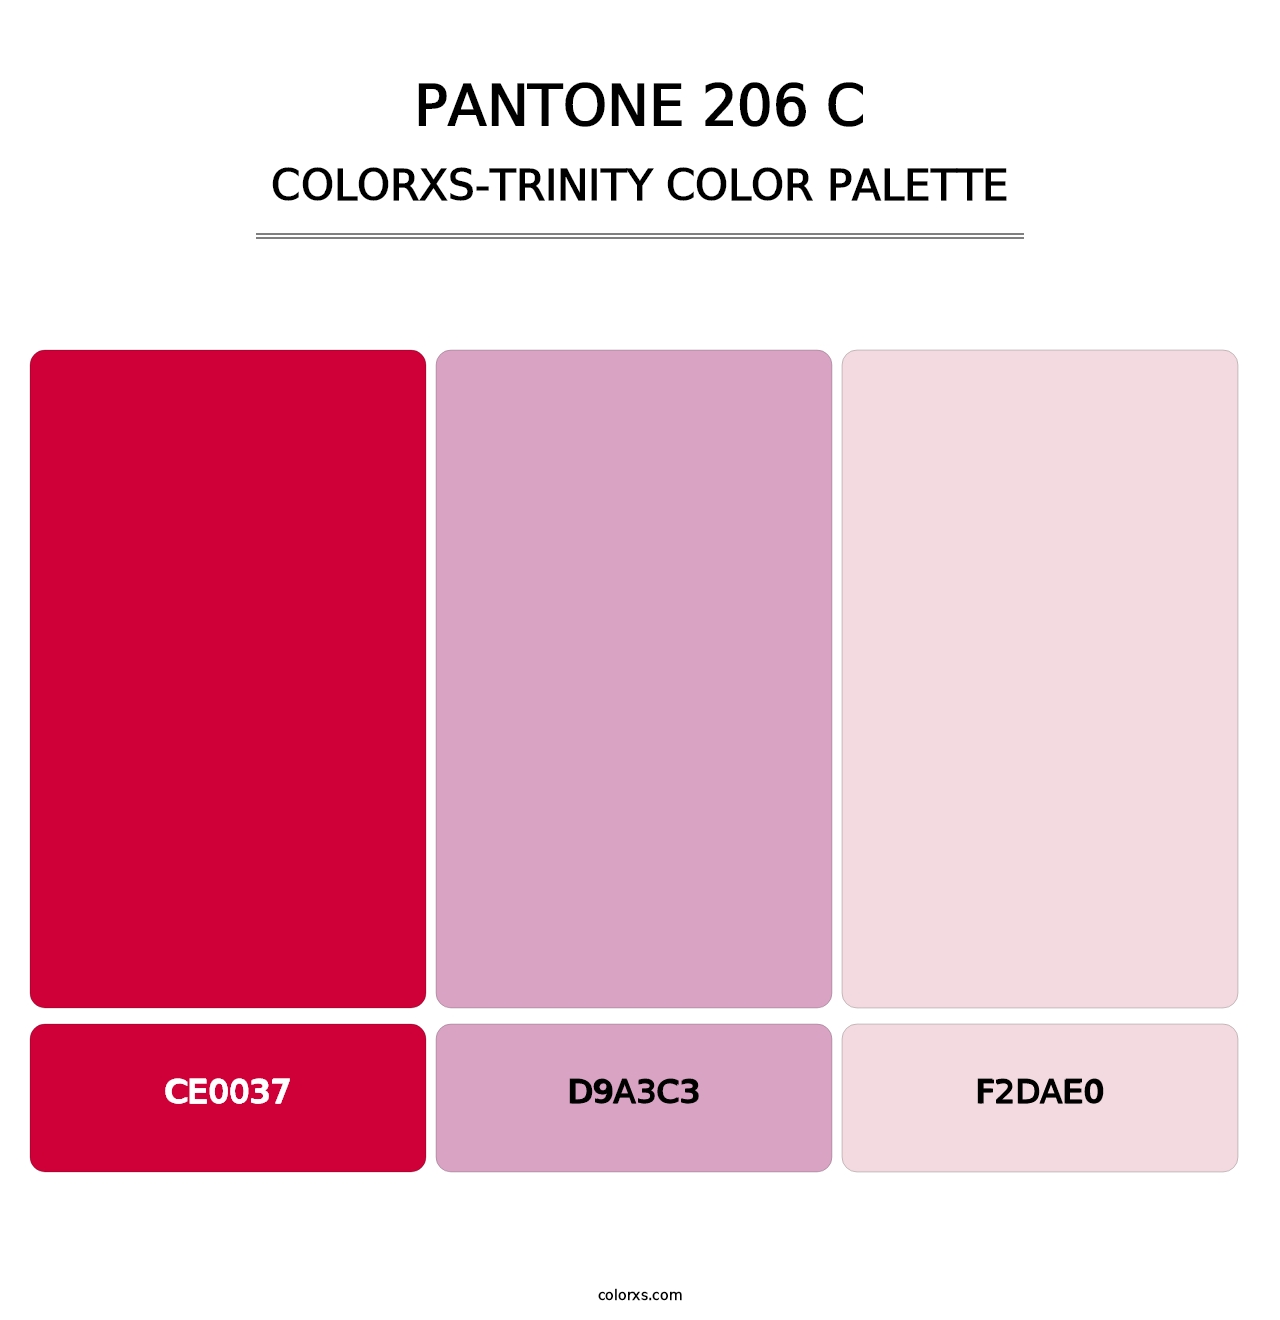 PANTONE 206 C - Colorxs Trinity Palette